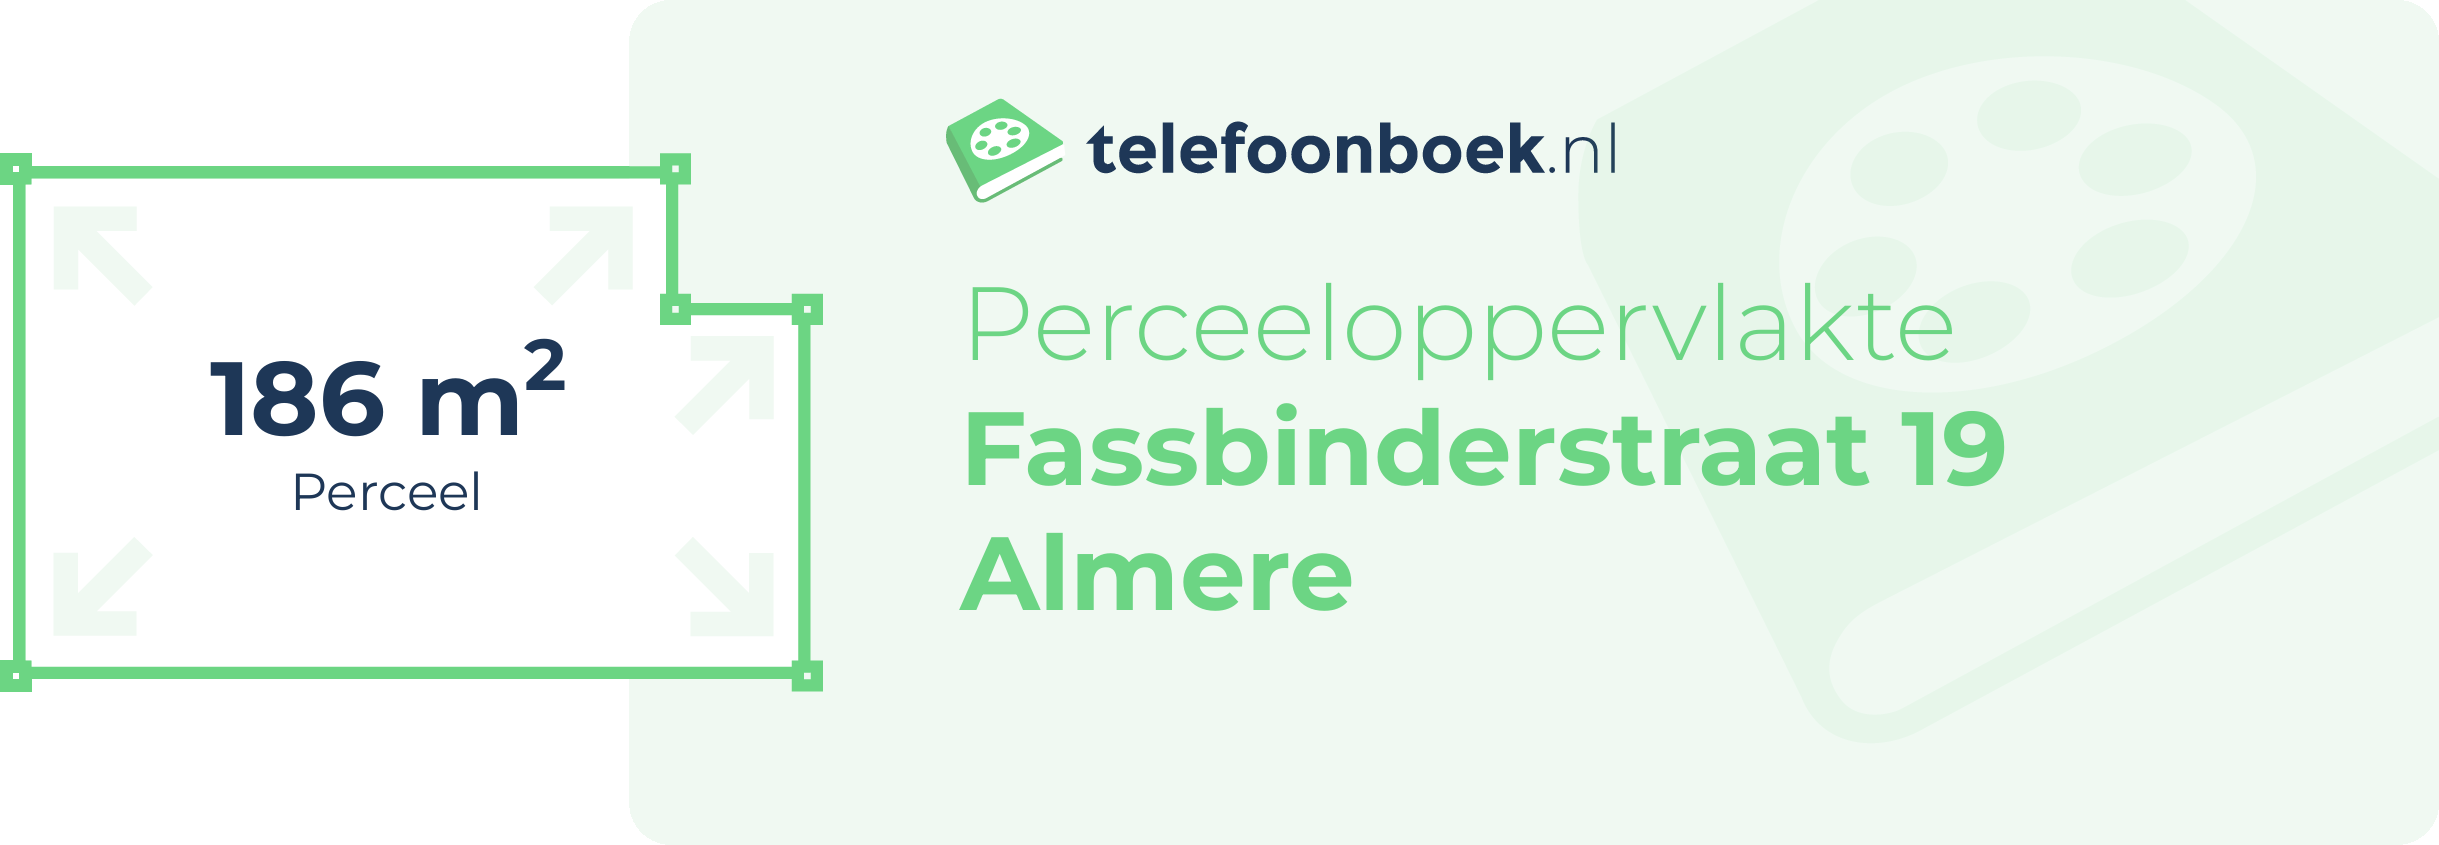 Perceeloppervlakte Fassbinderstraat 19 Almere